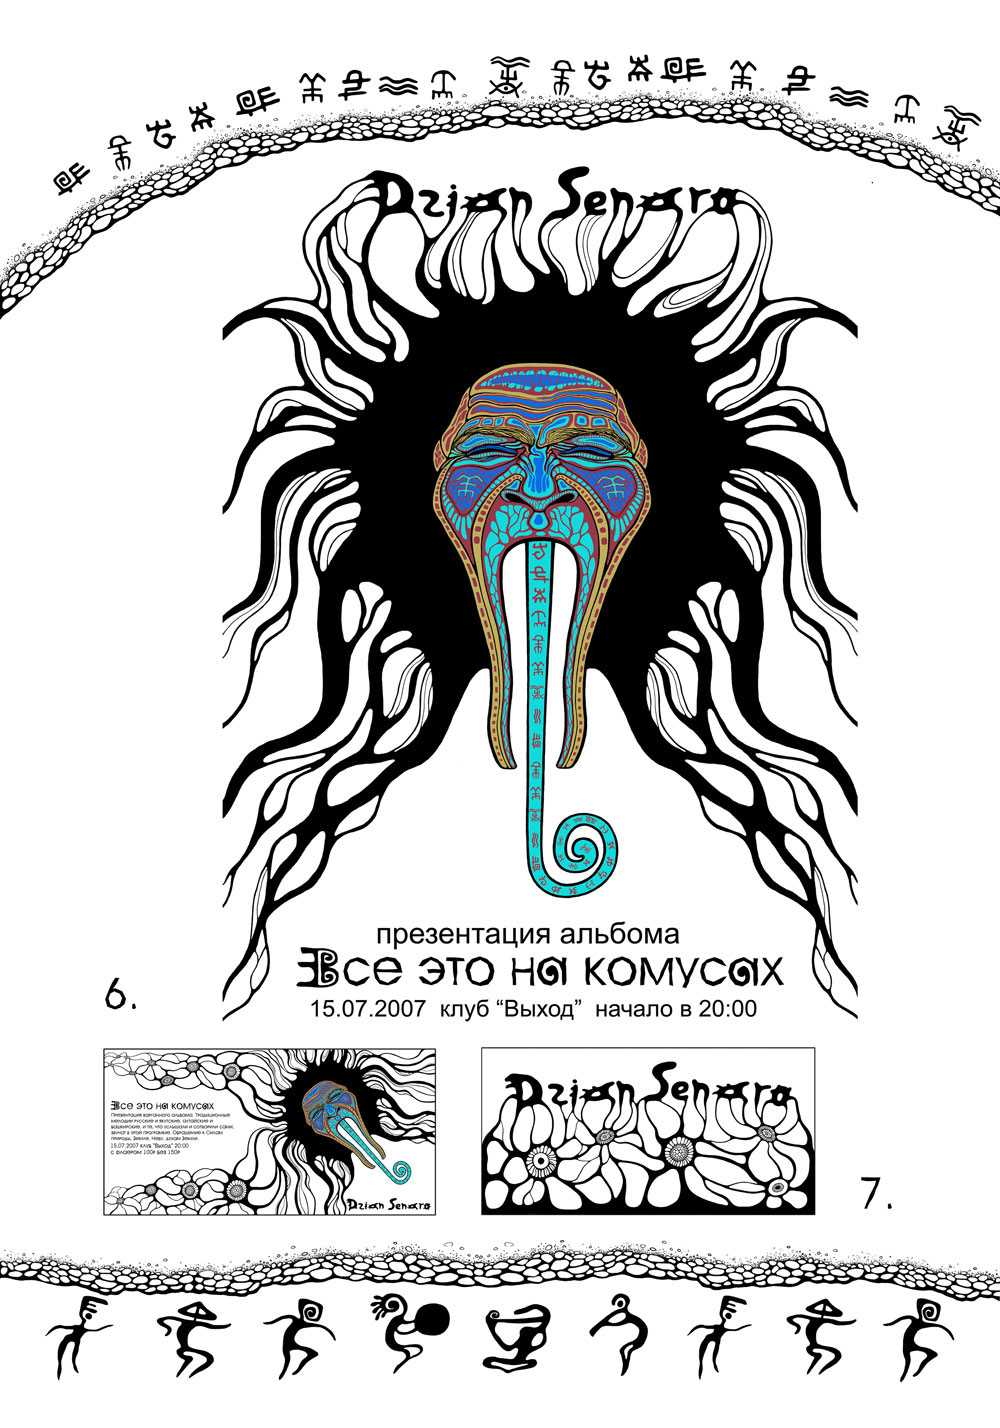 ethnic music vargan comus mask corporate style musical group mermaid rabbit ganesha pattern Black&white